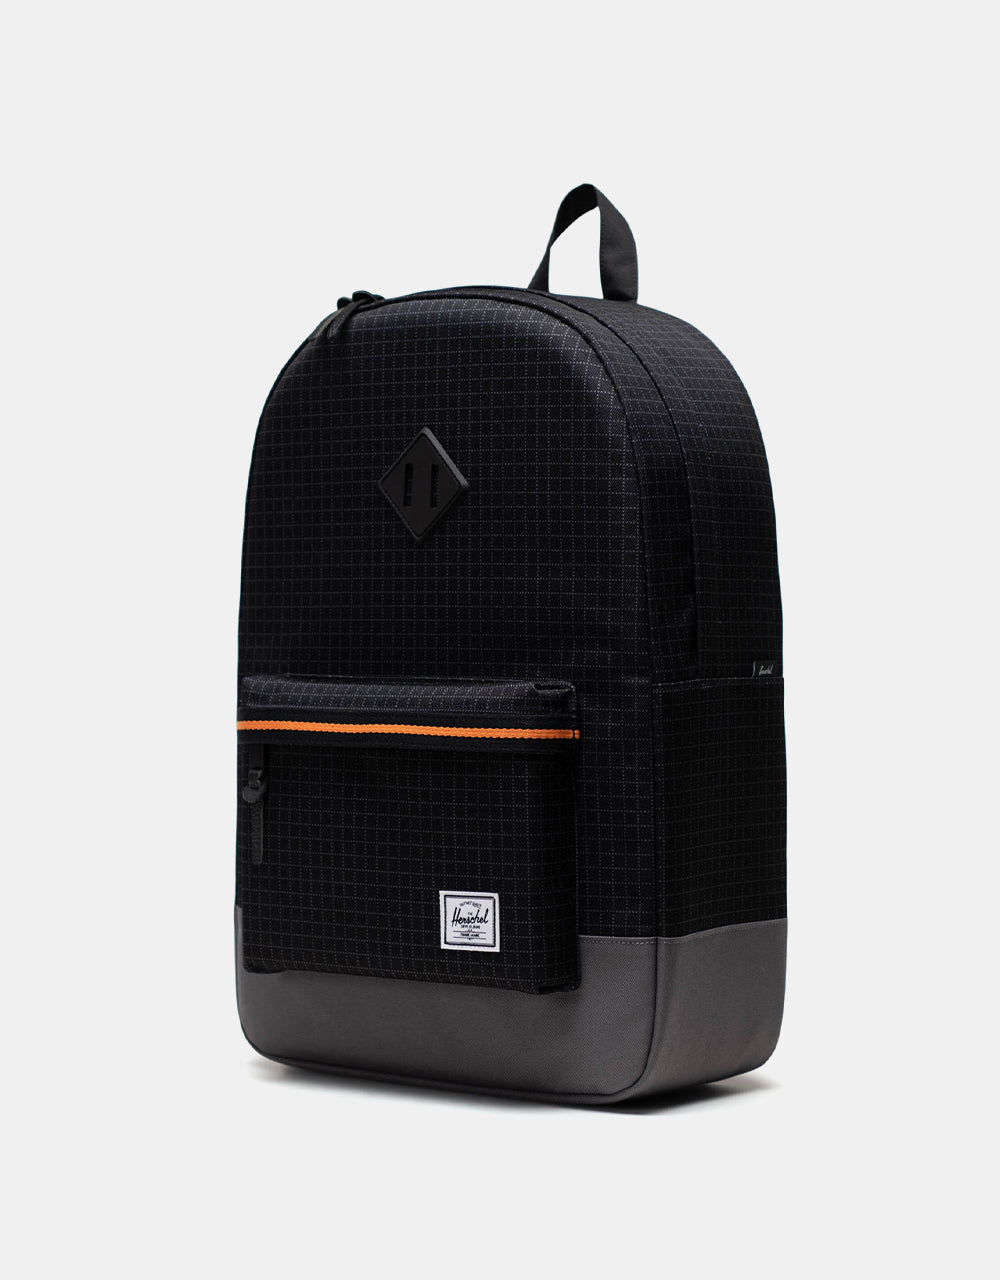 Herschel Supply Co. Heritage Backpack - Black Grid/Gargoyle/Sun Orange